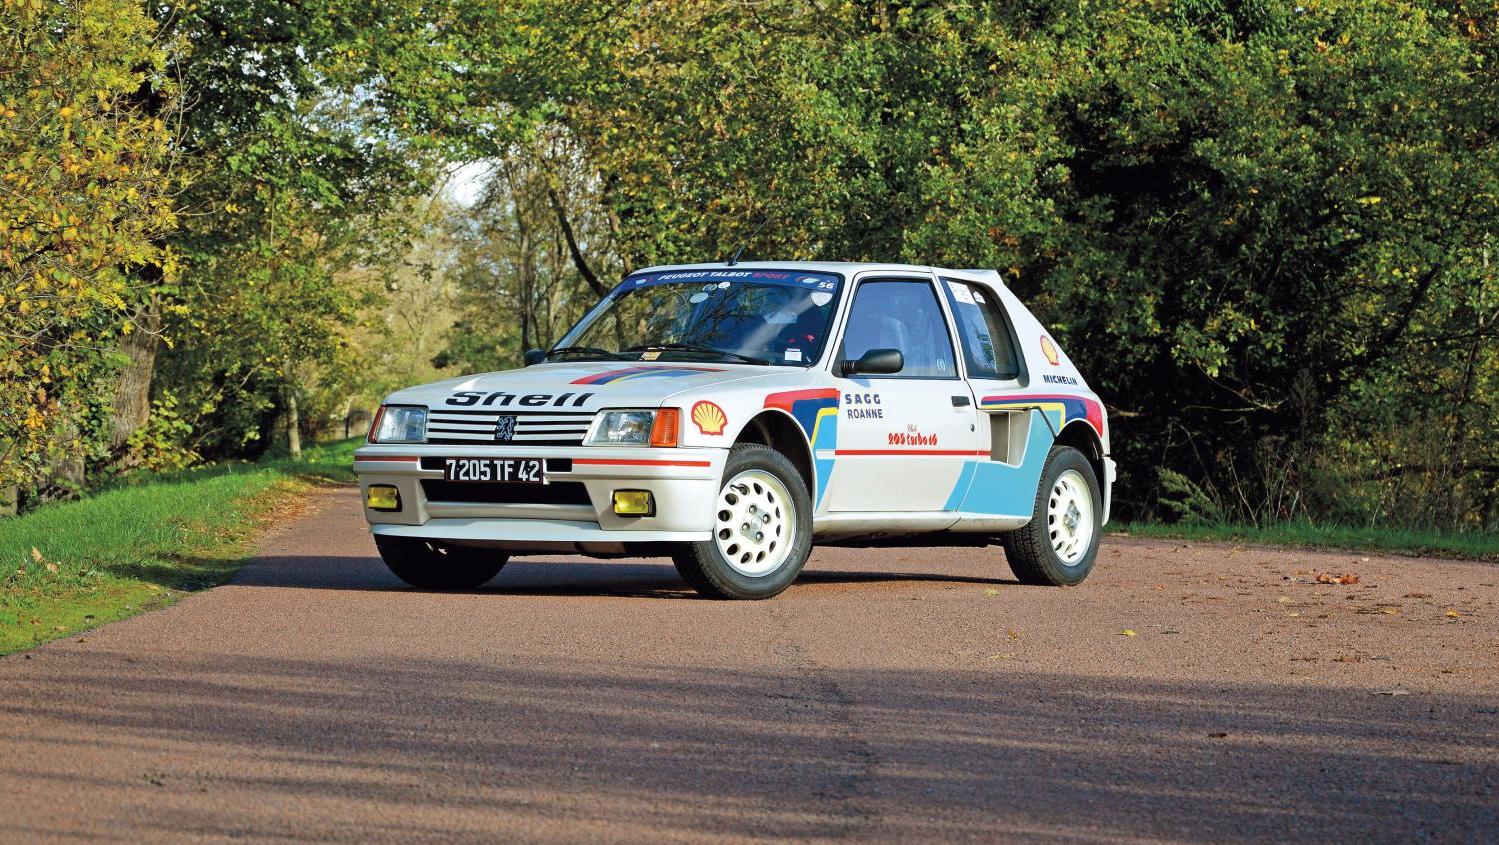 1985, Peugeot 205 Turbo 16, « série 200 », Peugeot - Talbot Info Rallye. Adjugé :... Peugeot, Fiat et Bentley